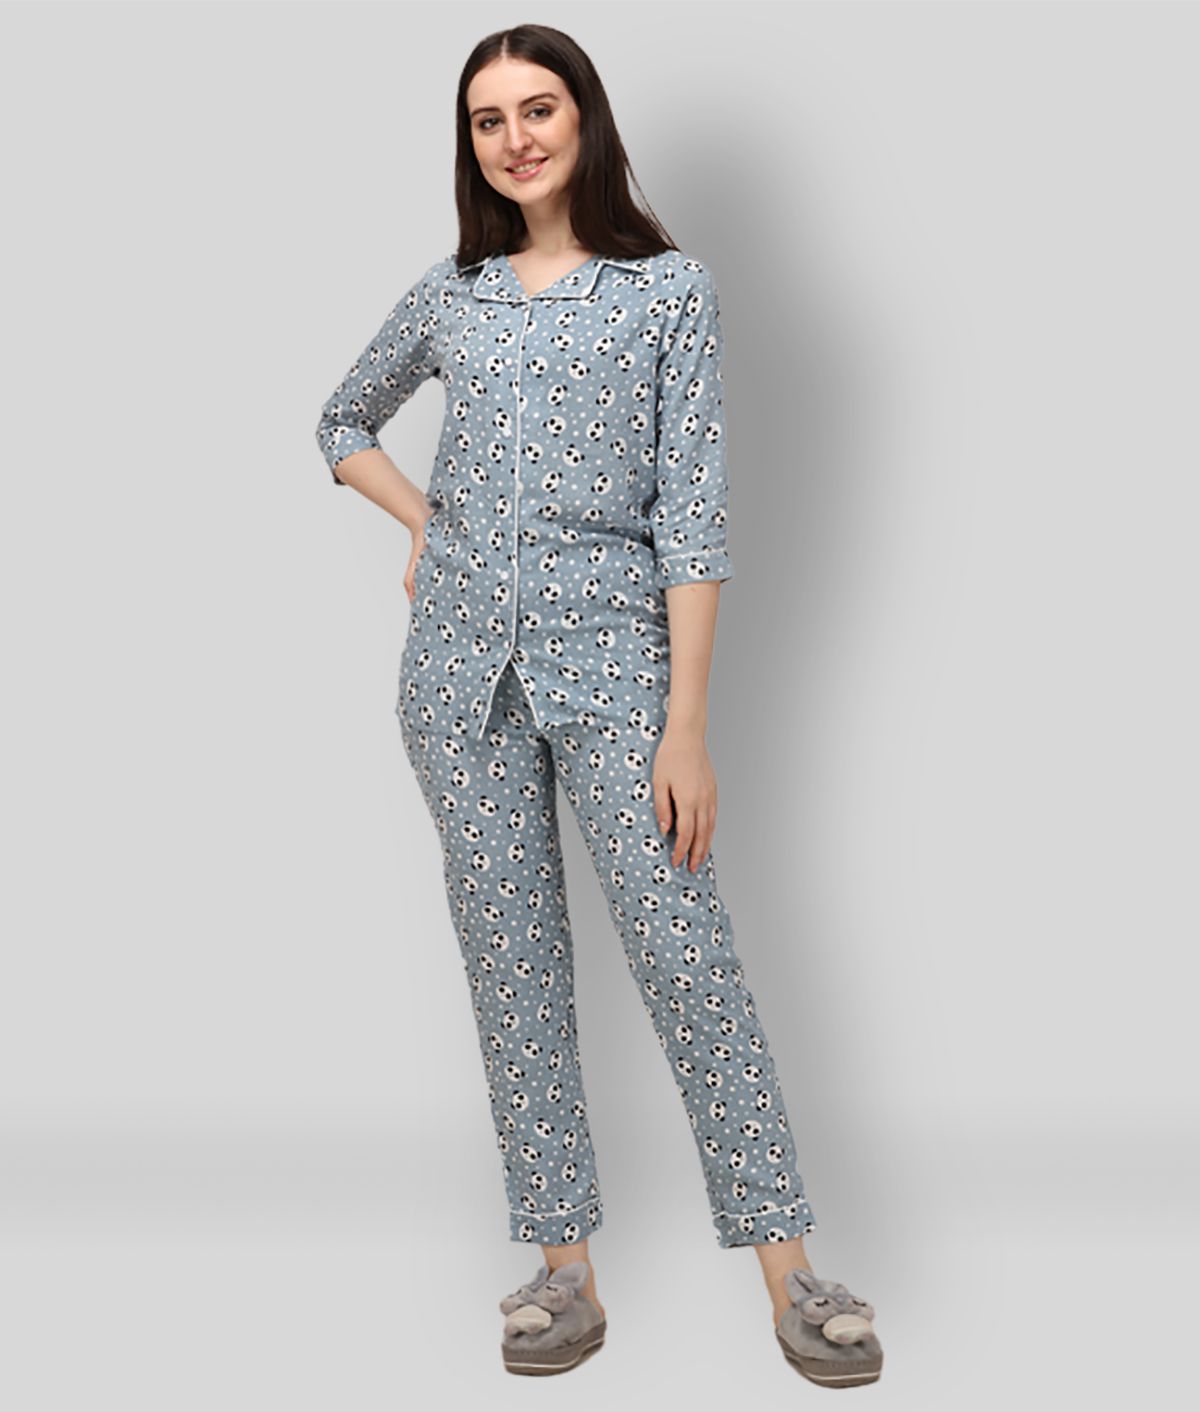     			Berrylicious - Light Grey Rayon Women's Nightwear Nightsuit Sets ( Pack of 1 )